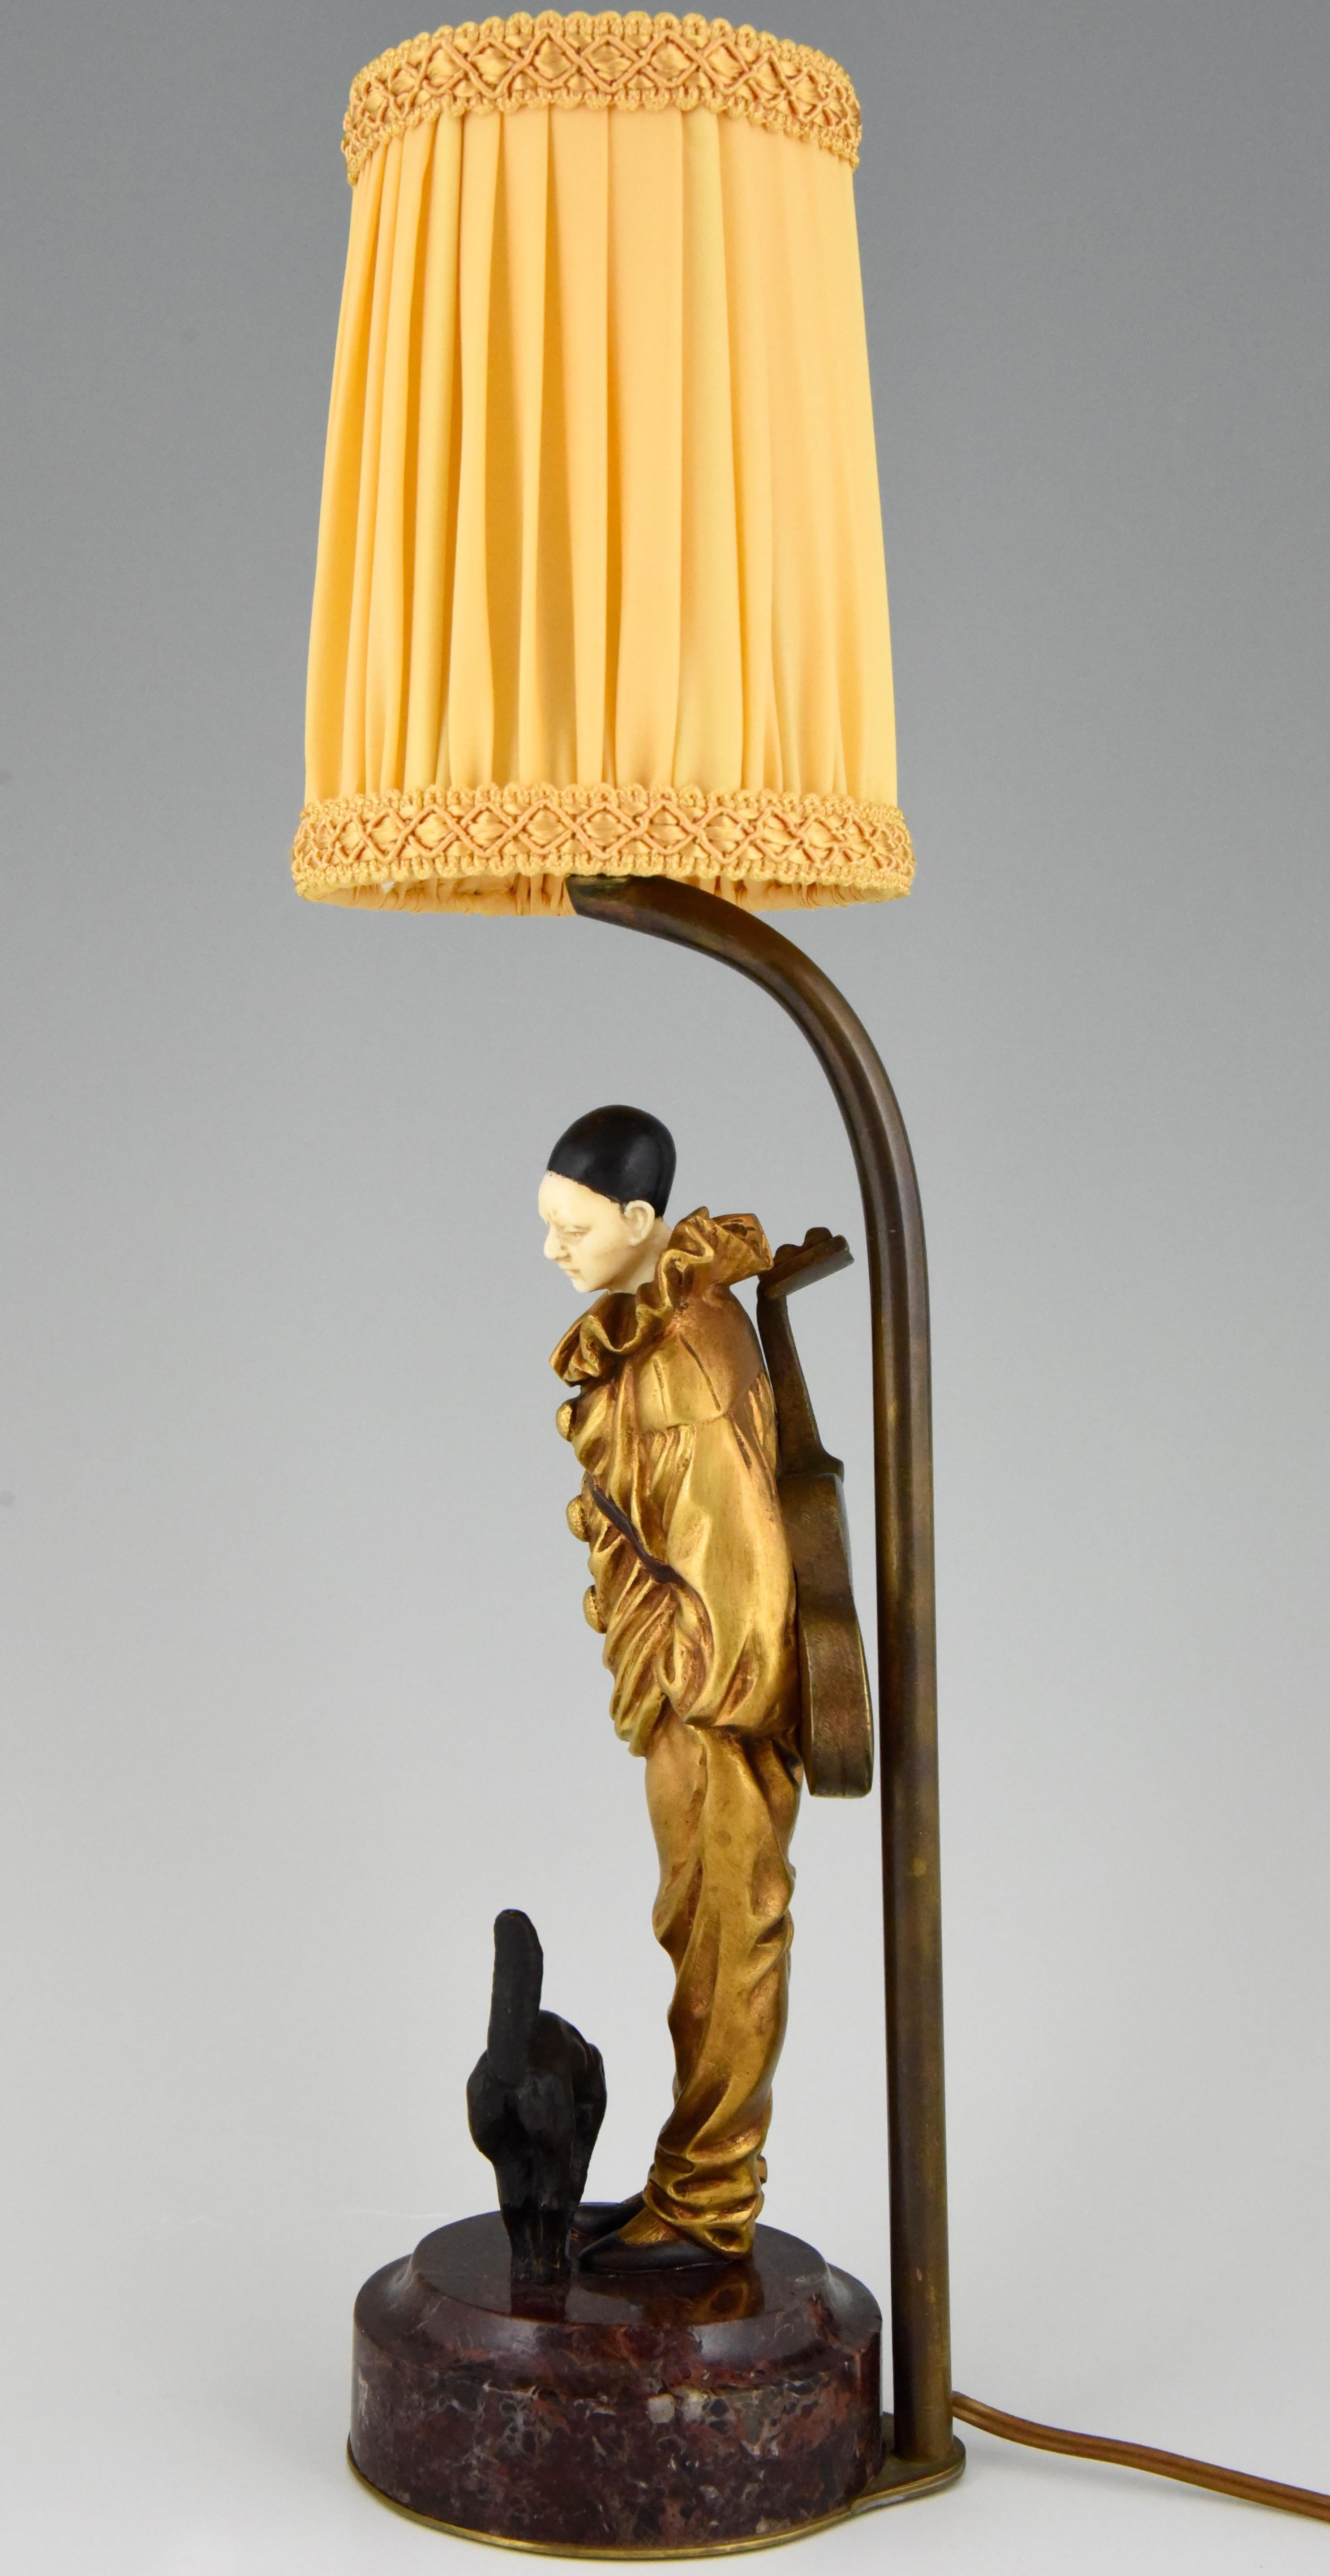 clown lamp vintage